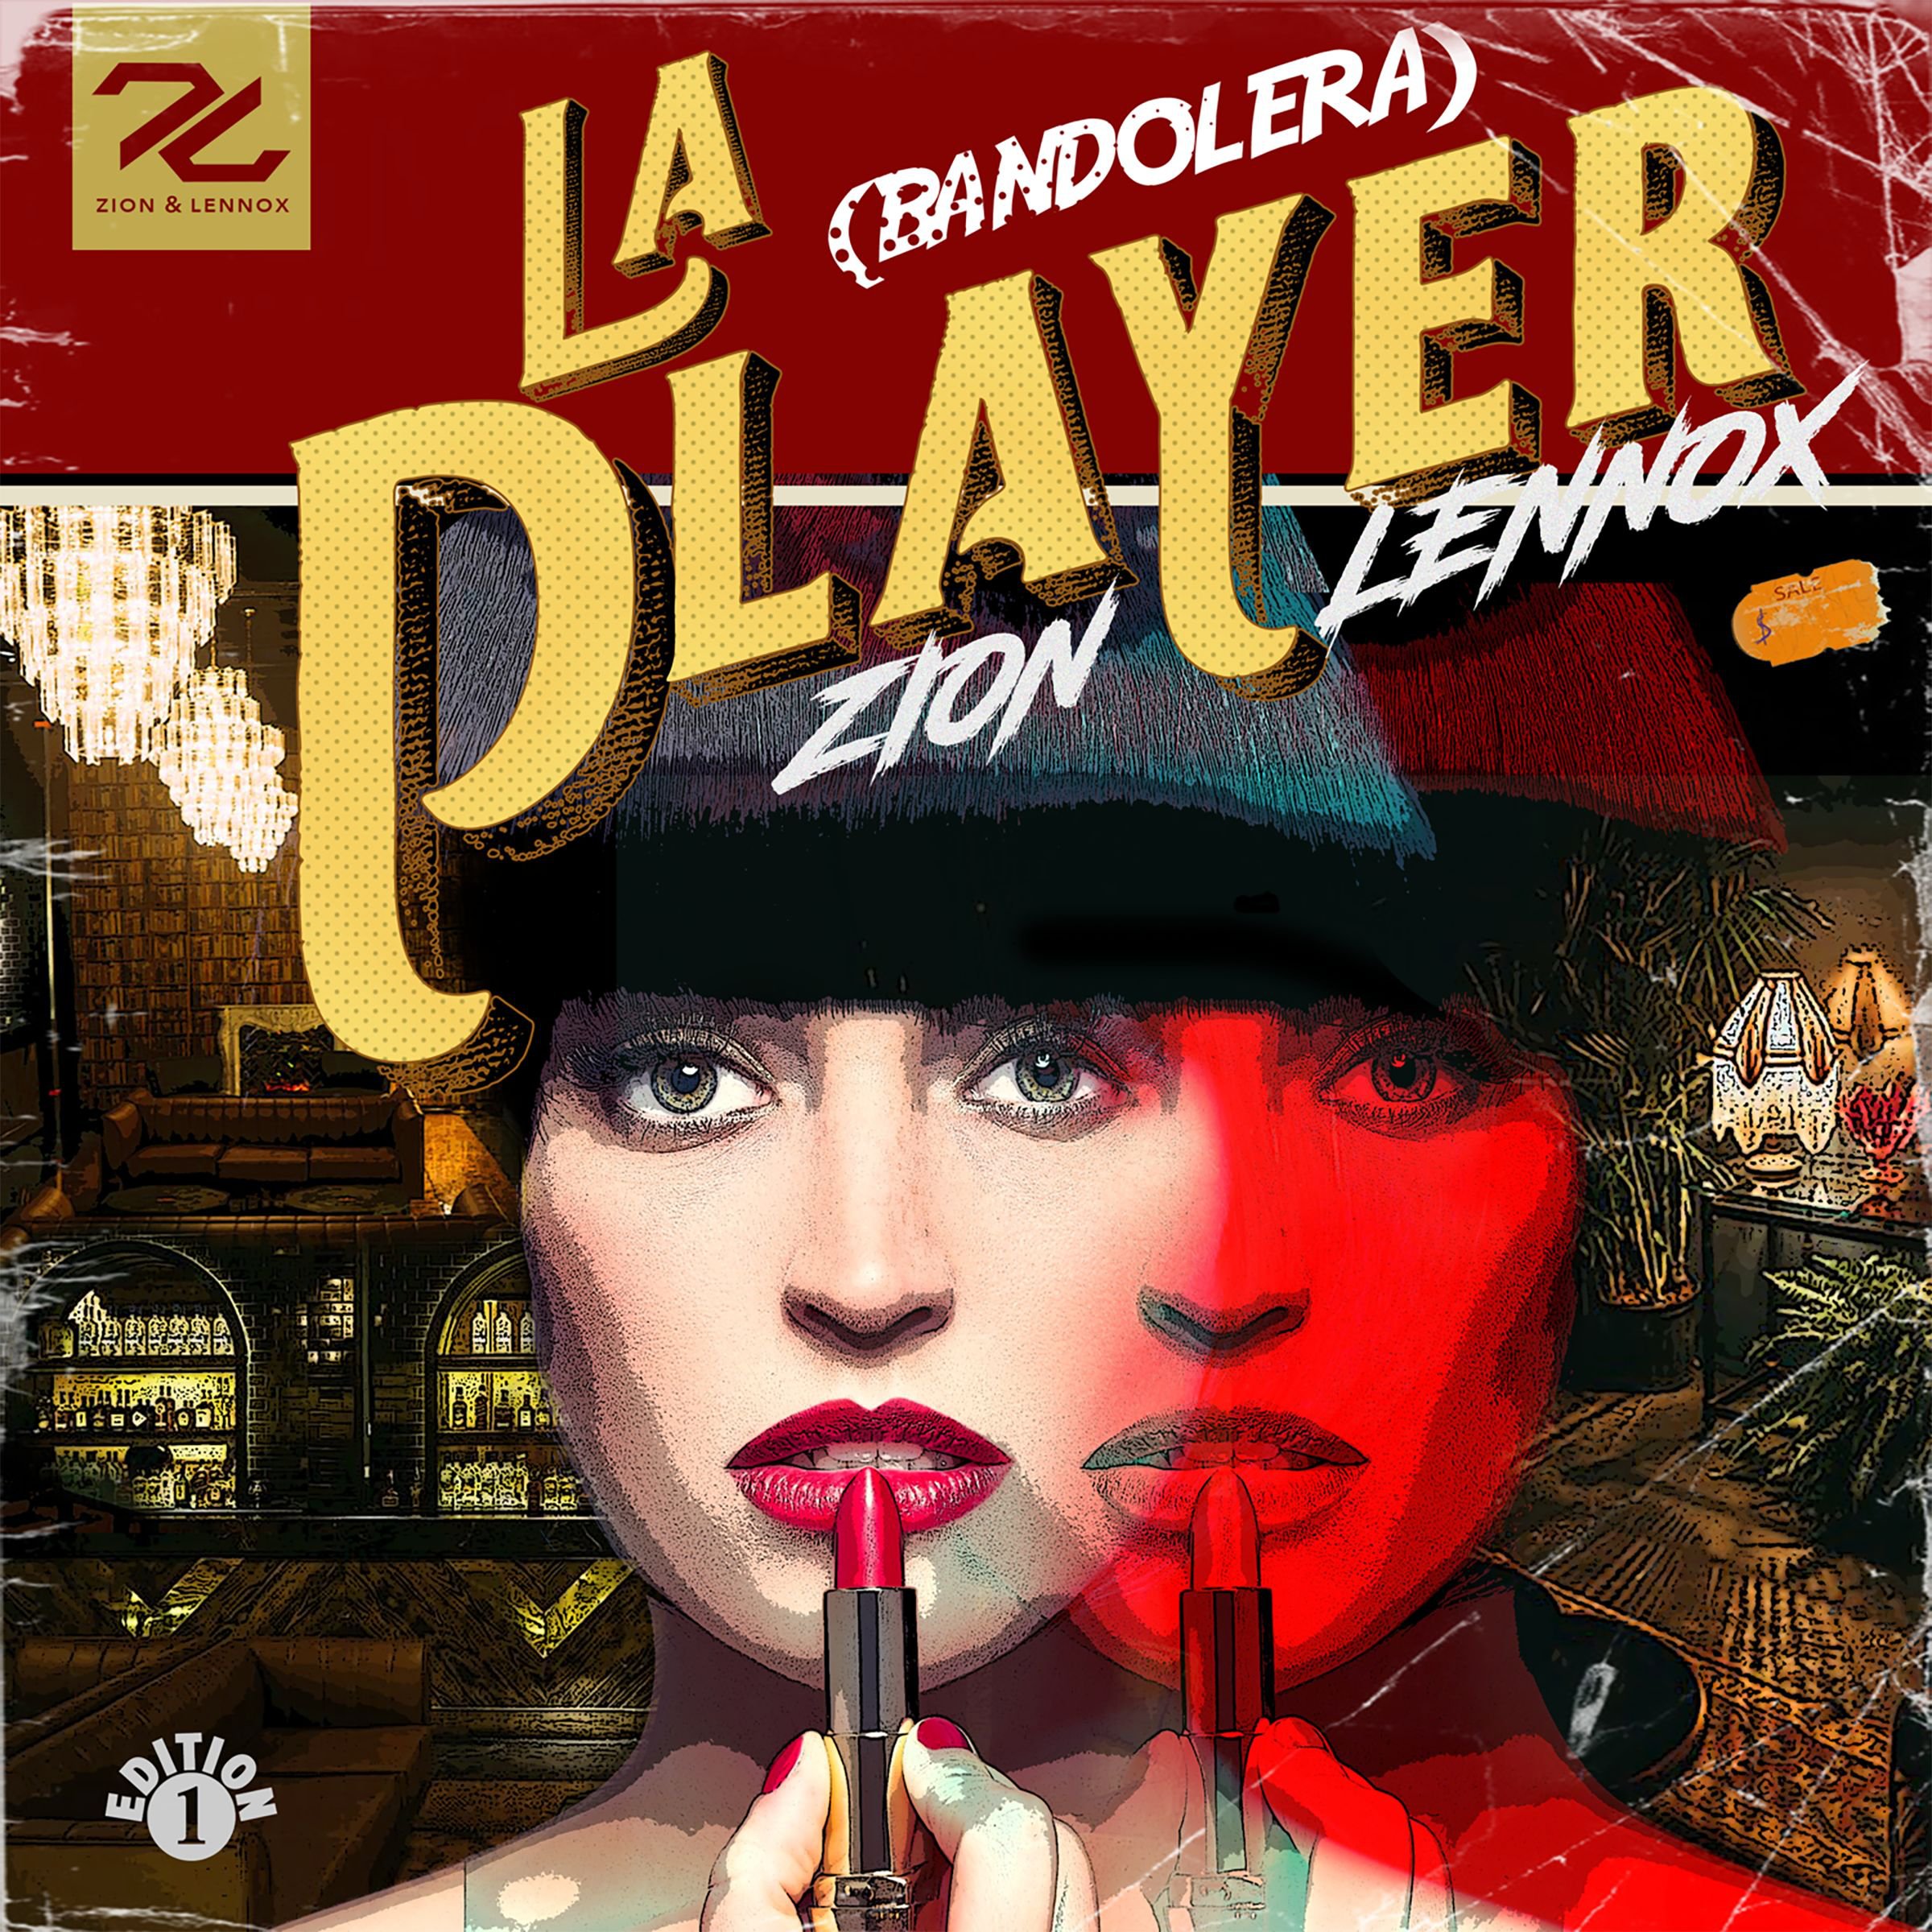 La player. Zion & Lennox. Zion y Lennox - la Player_bandolera (2019). Zion перевести.